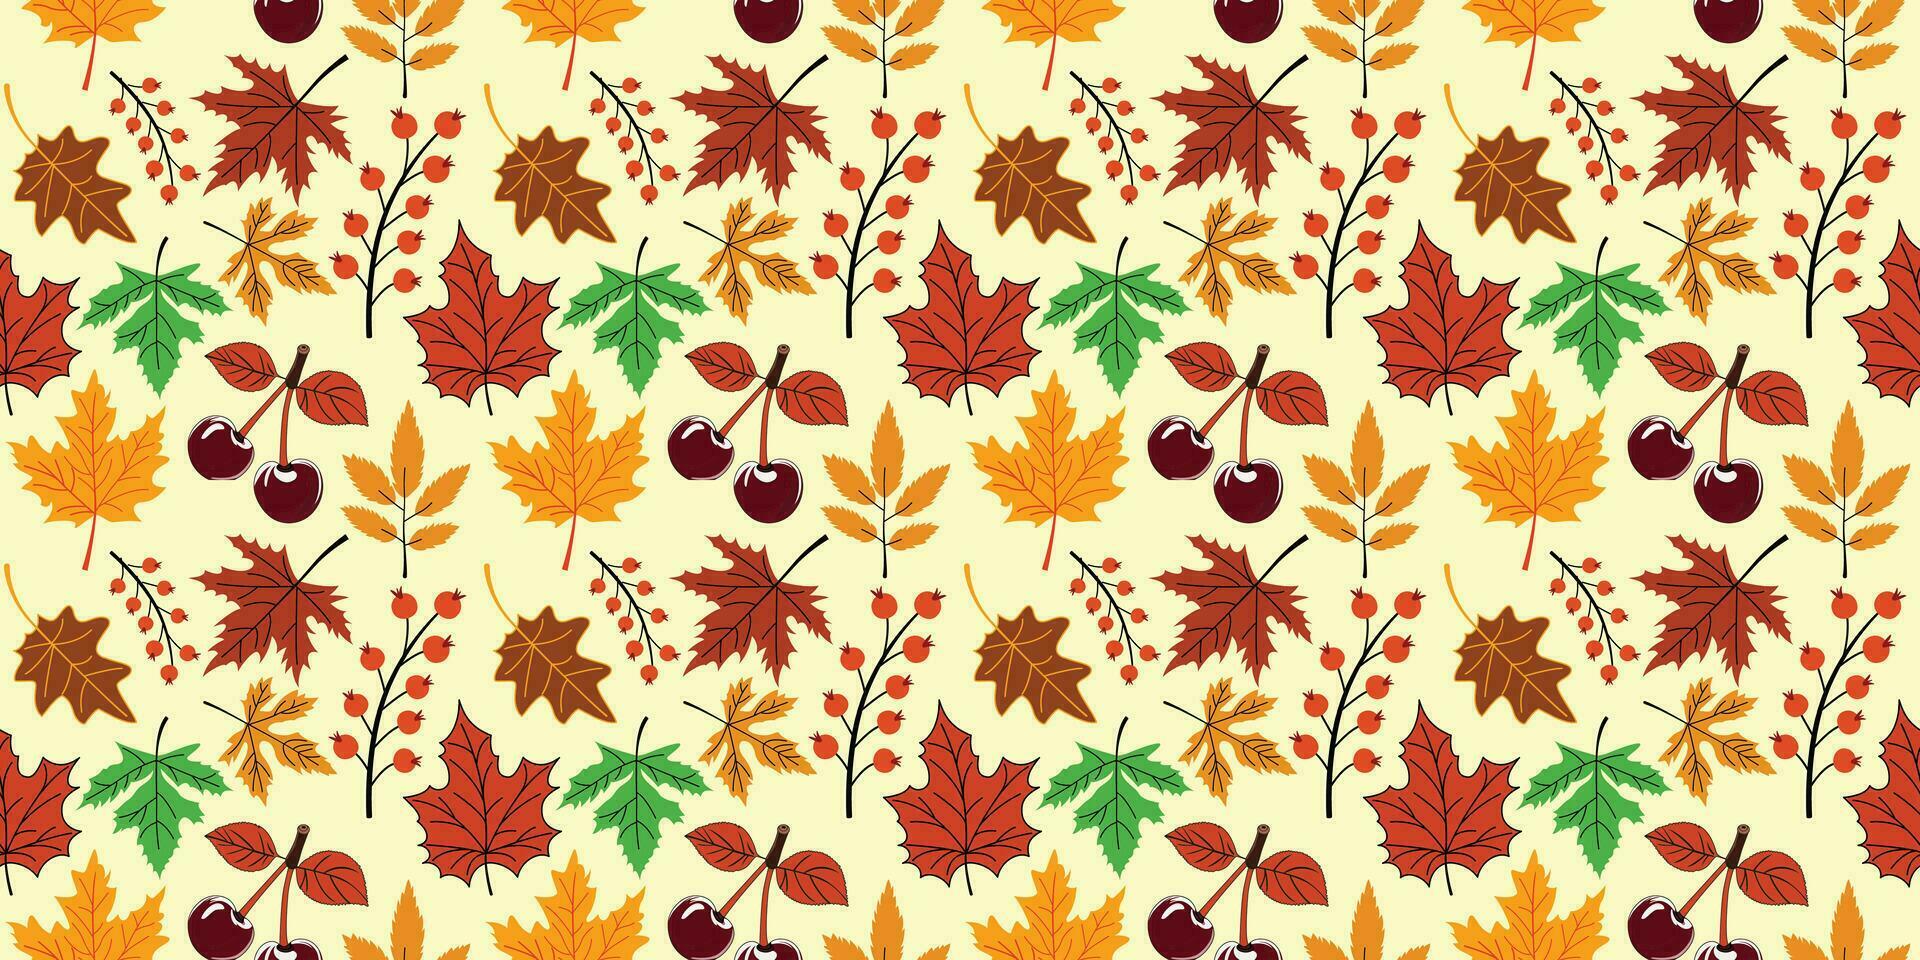 Autumn leaves seamless pattern set vector design